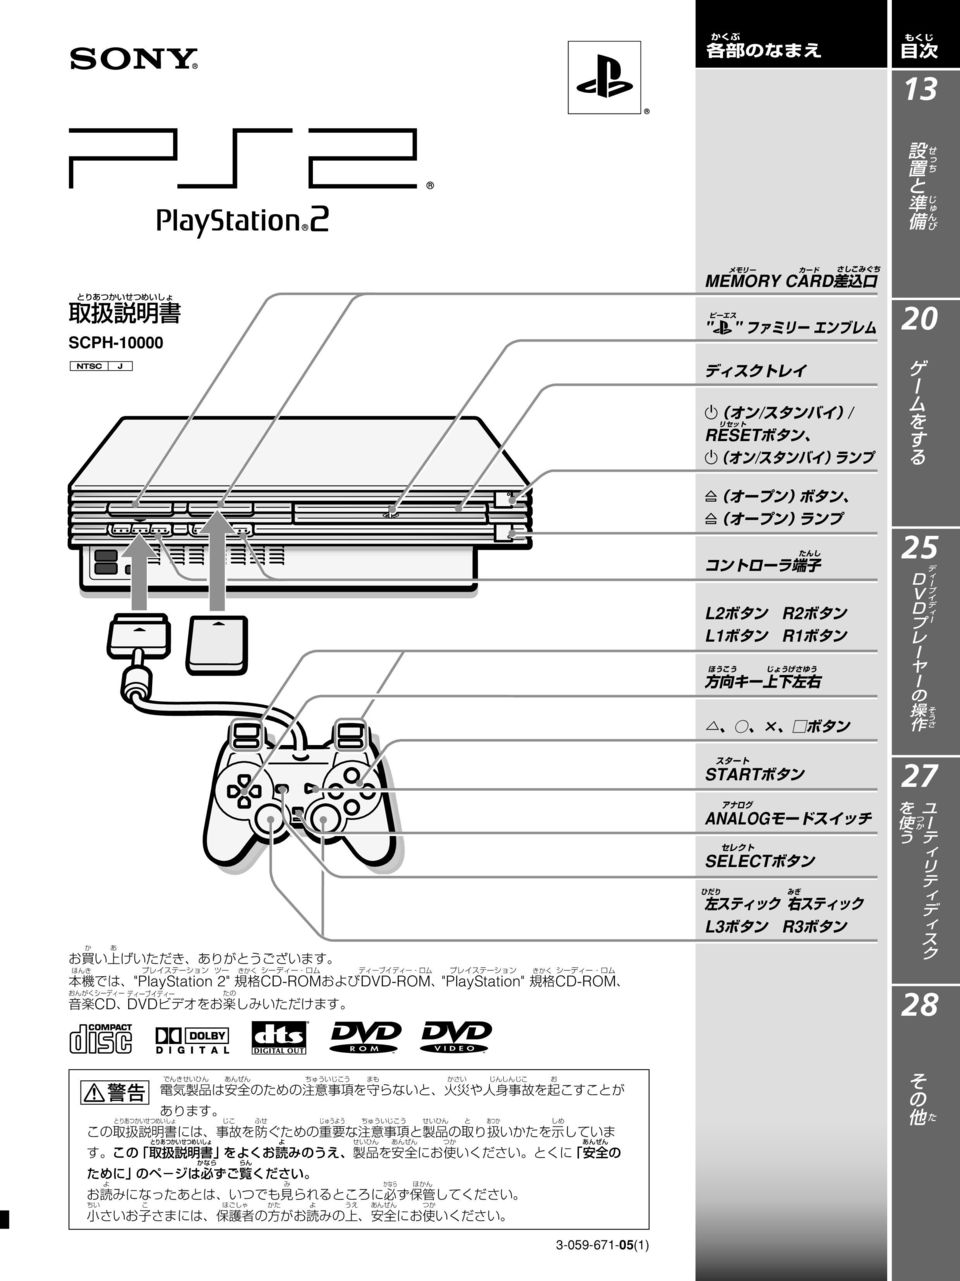 2" CD-ROMDVD-ROM"PlayStation" CD-ROM